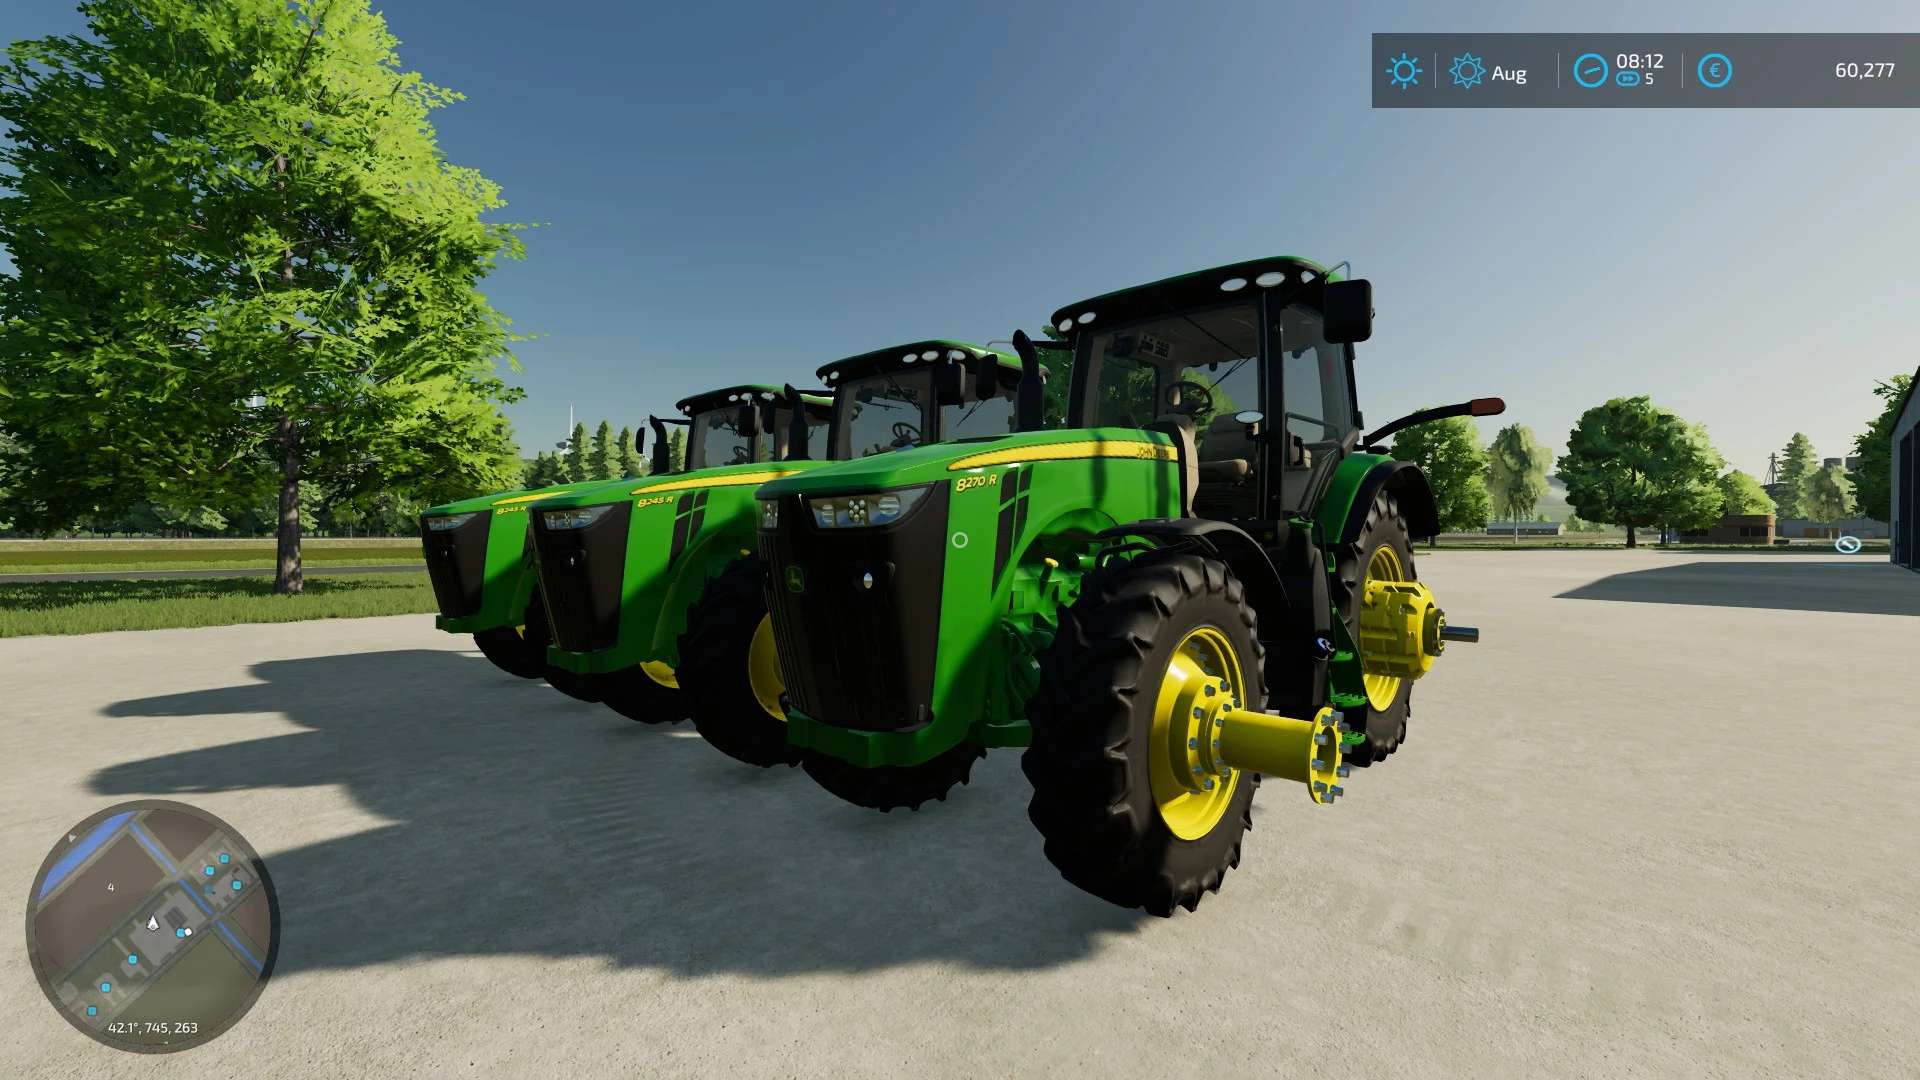 John Deere 8R 2018 v1.0 FS22 - Farming Simulator 22 Mod | FS22 mod